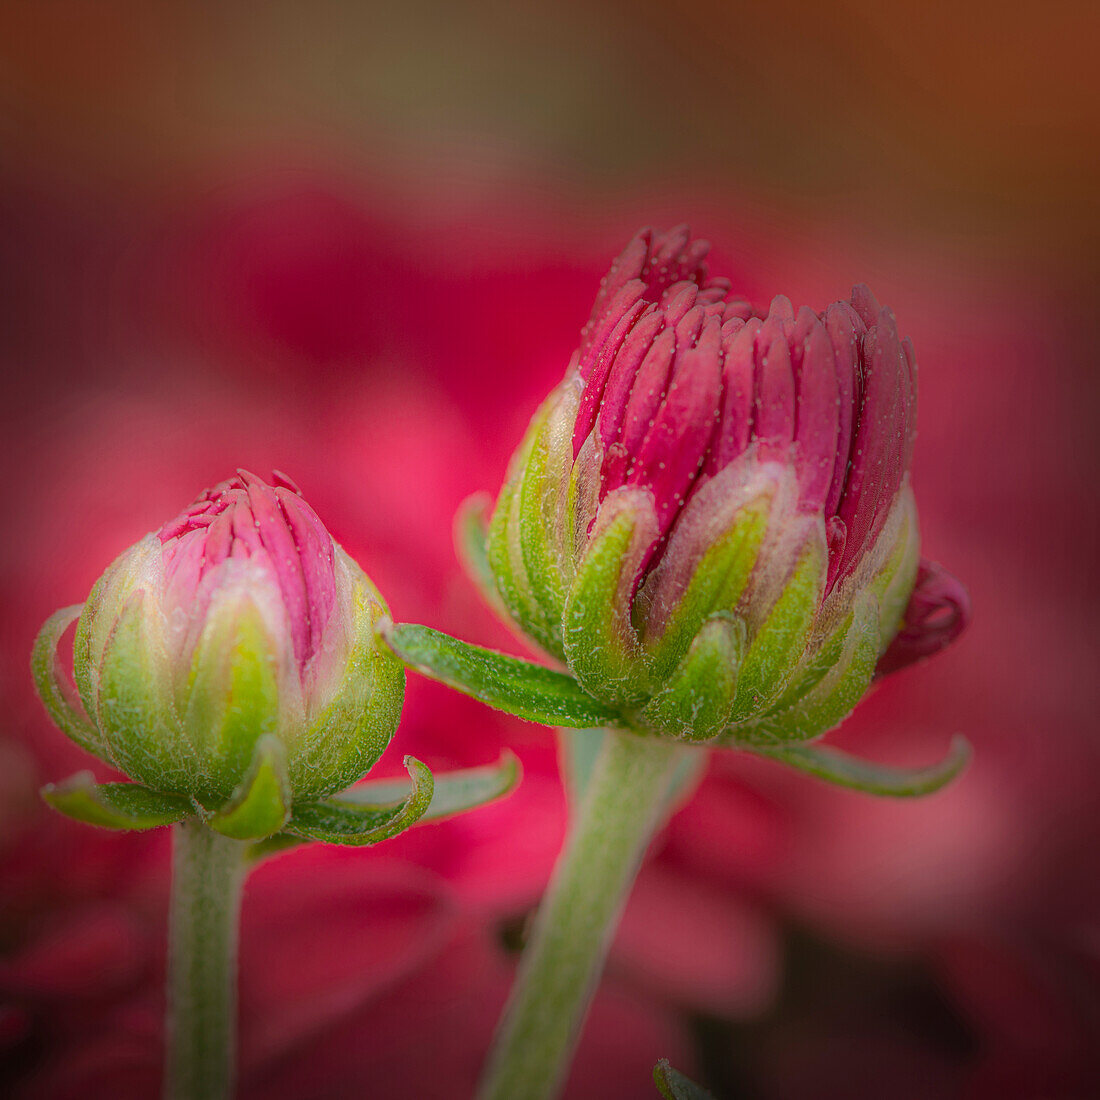 USA, New Jersey, Rio Grande. Close-up of carnation flower buds in garden